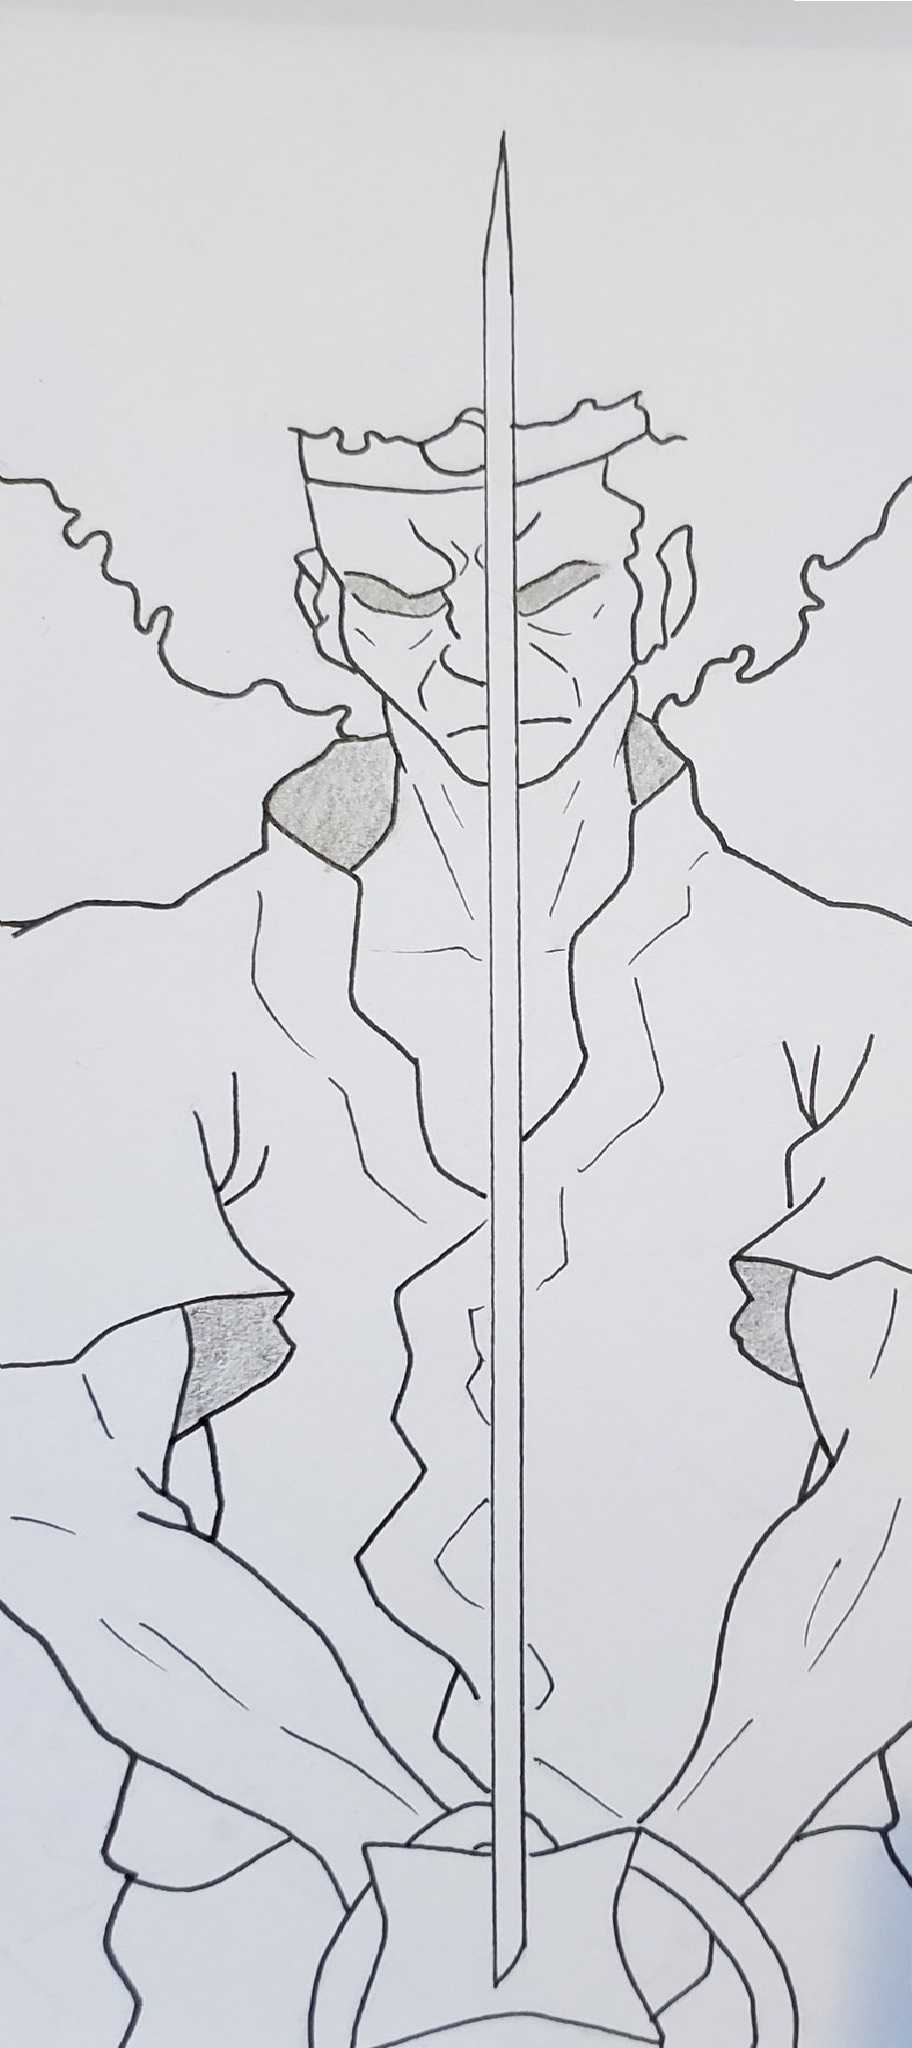 Afro Samurai Wallpaper Drawing 1